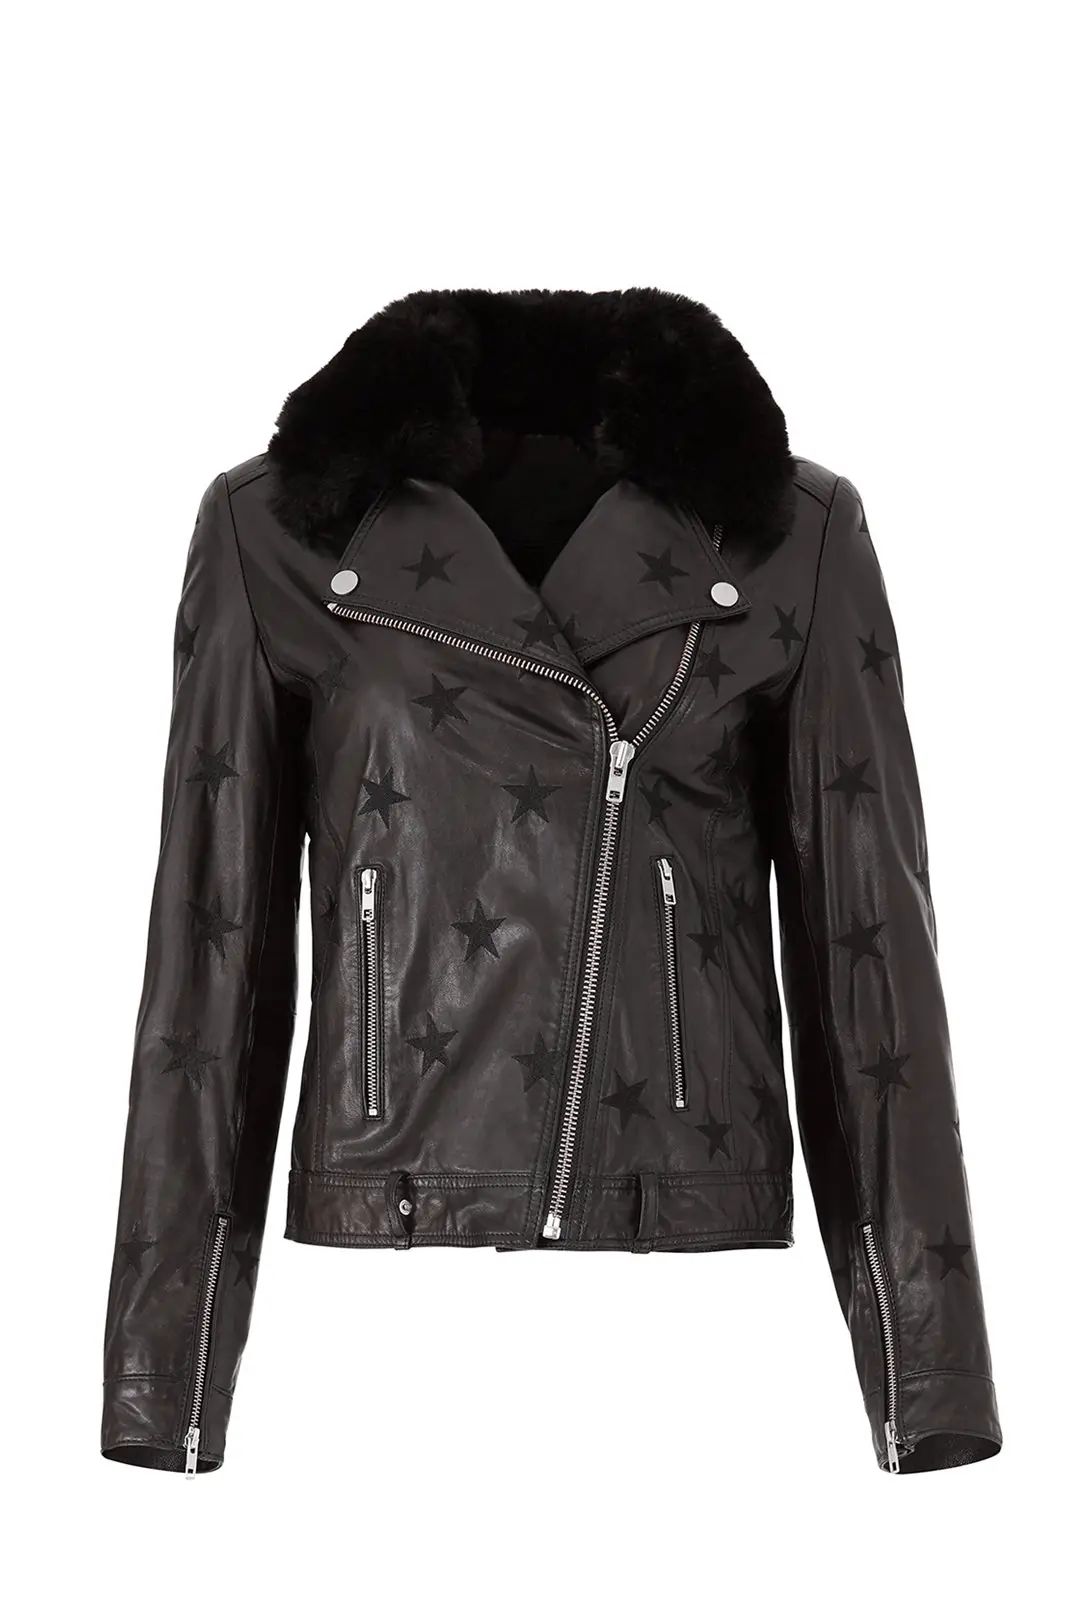 Samantha Sipos Black Seeing Stars Faux Fur Jacket | Rent The Runway